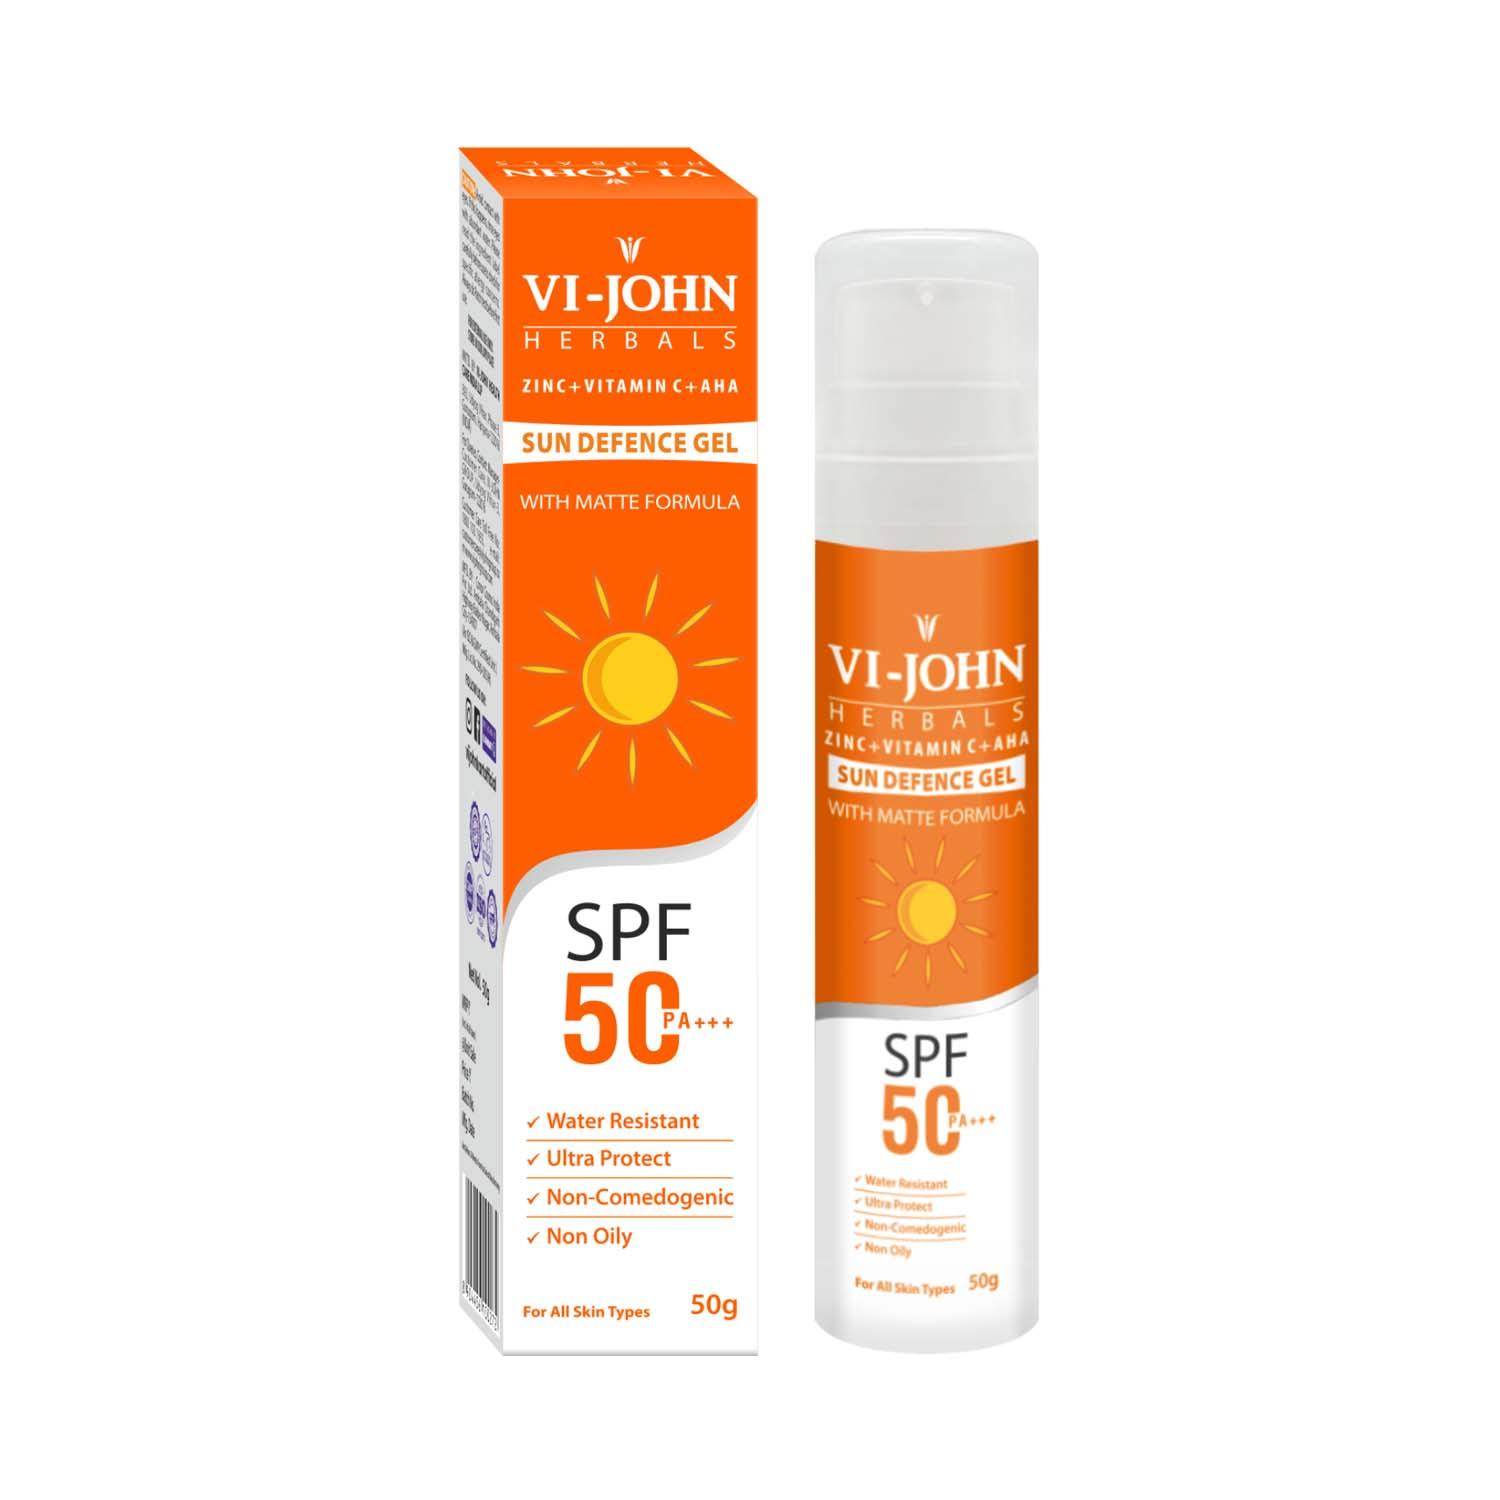 VI-JOHN | VI-JOHN Herbals Sun Defence Gel SPF 50 PA+++ with Matte Formula (50g)